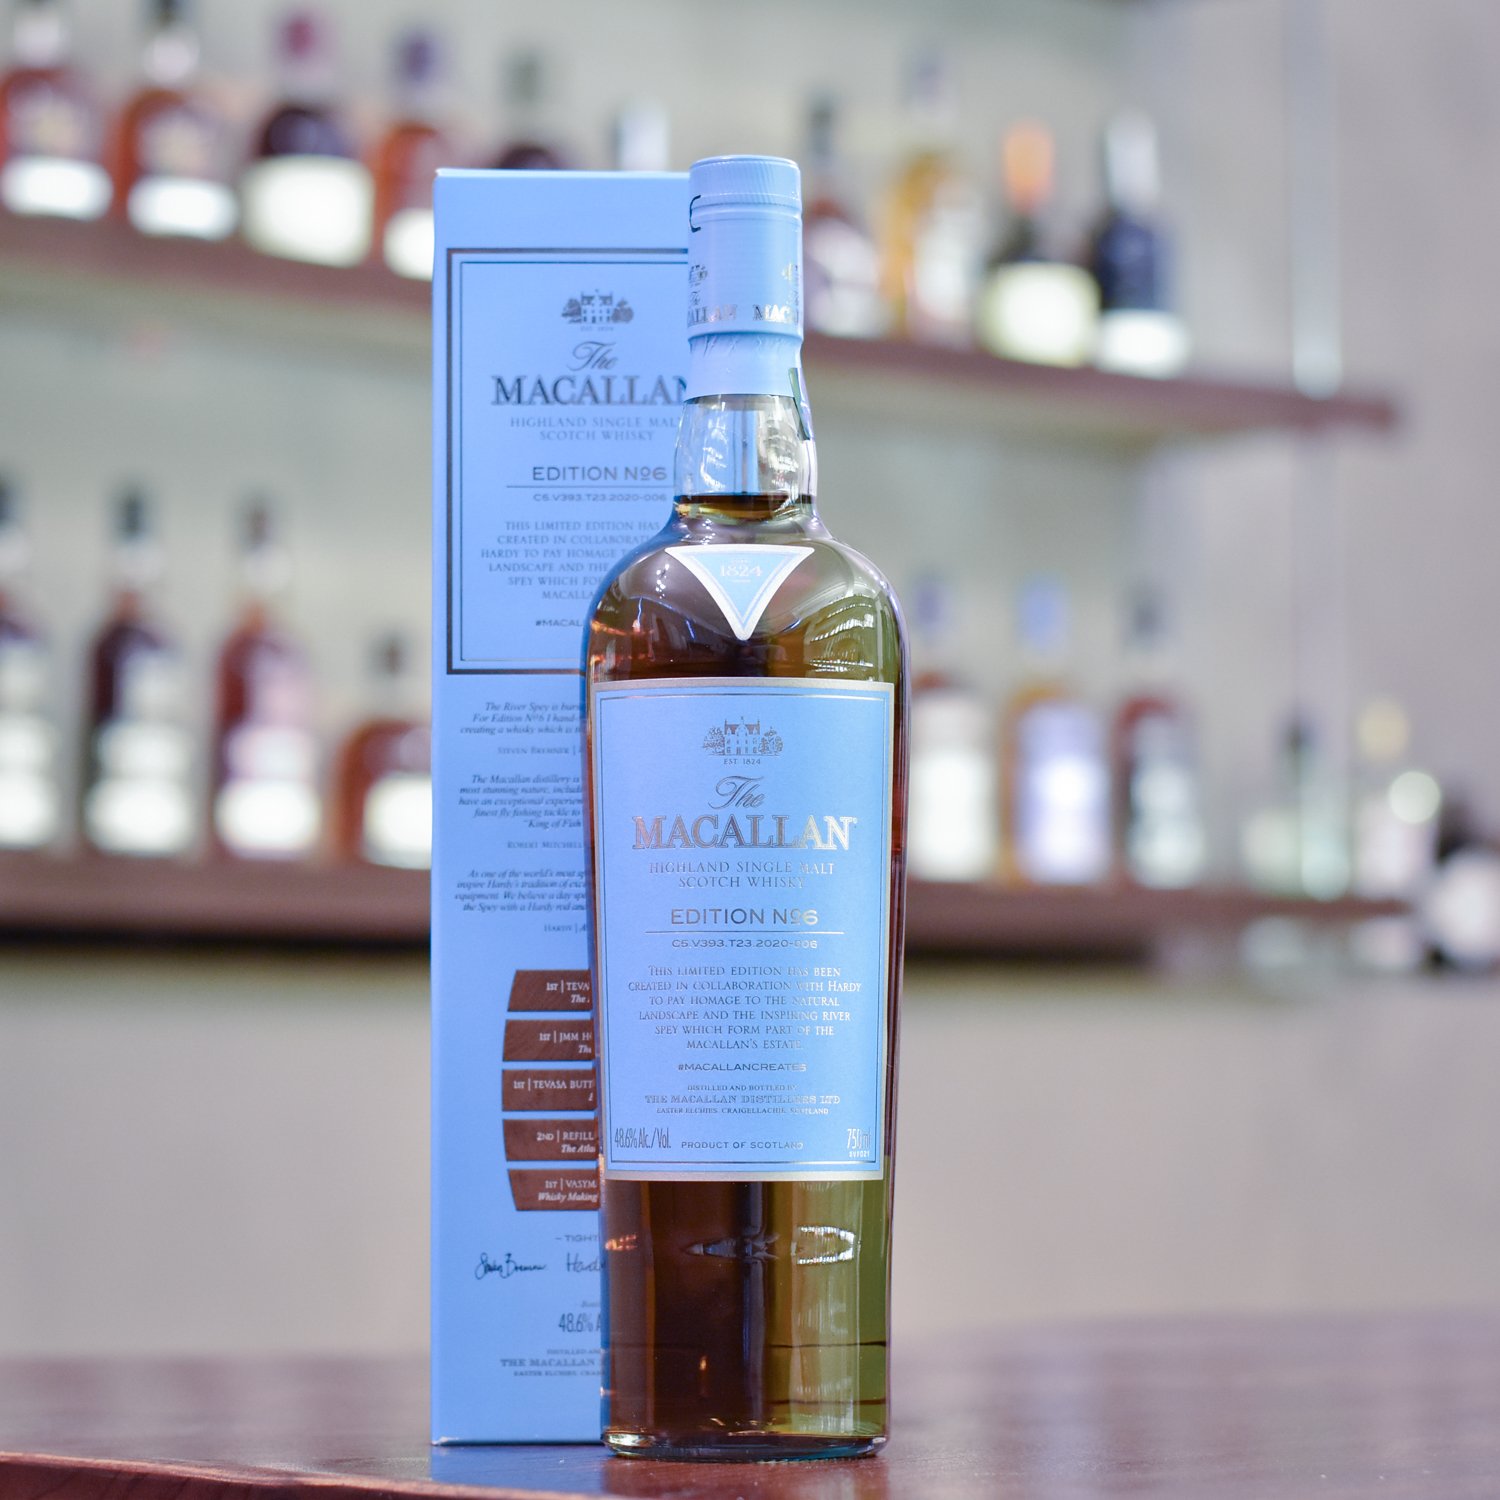 The Macallan Edition No. 1 Scotch Whisky